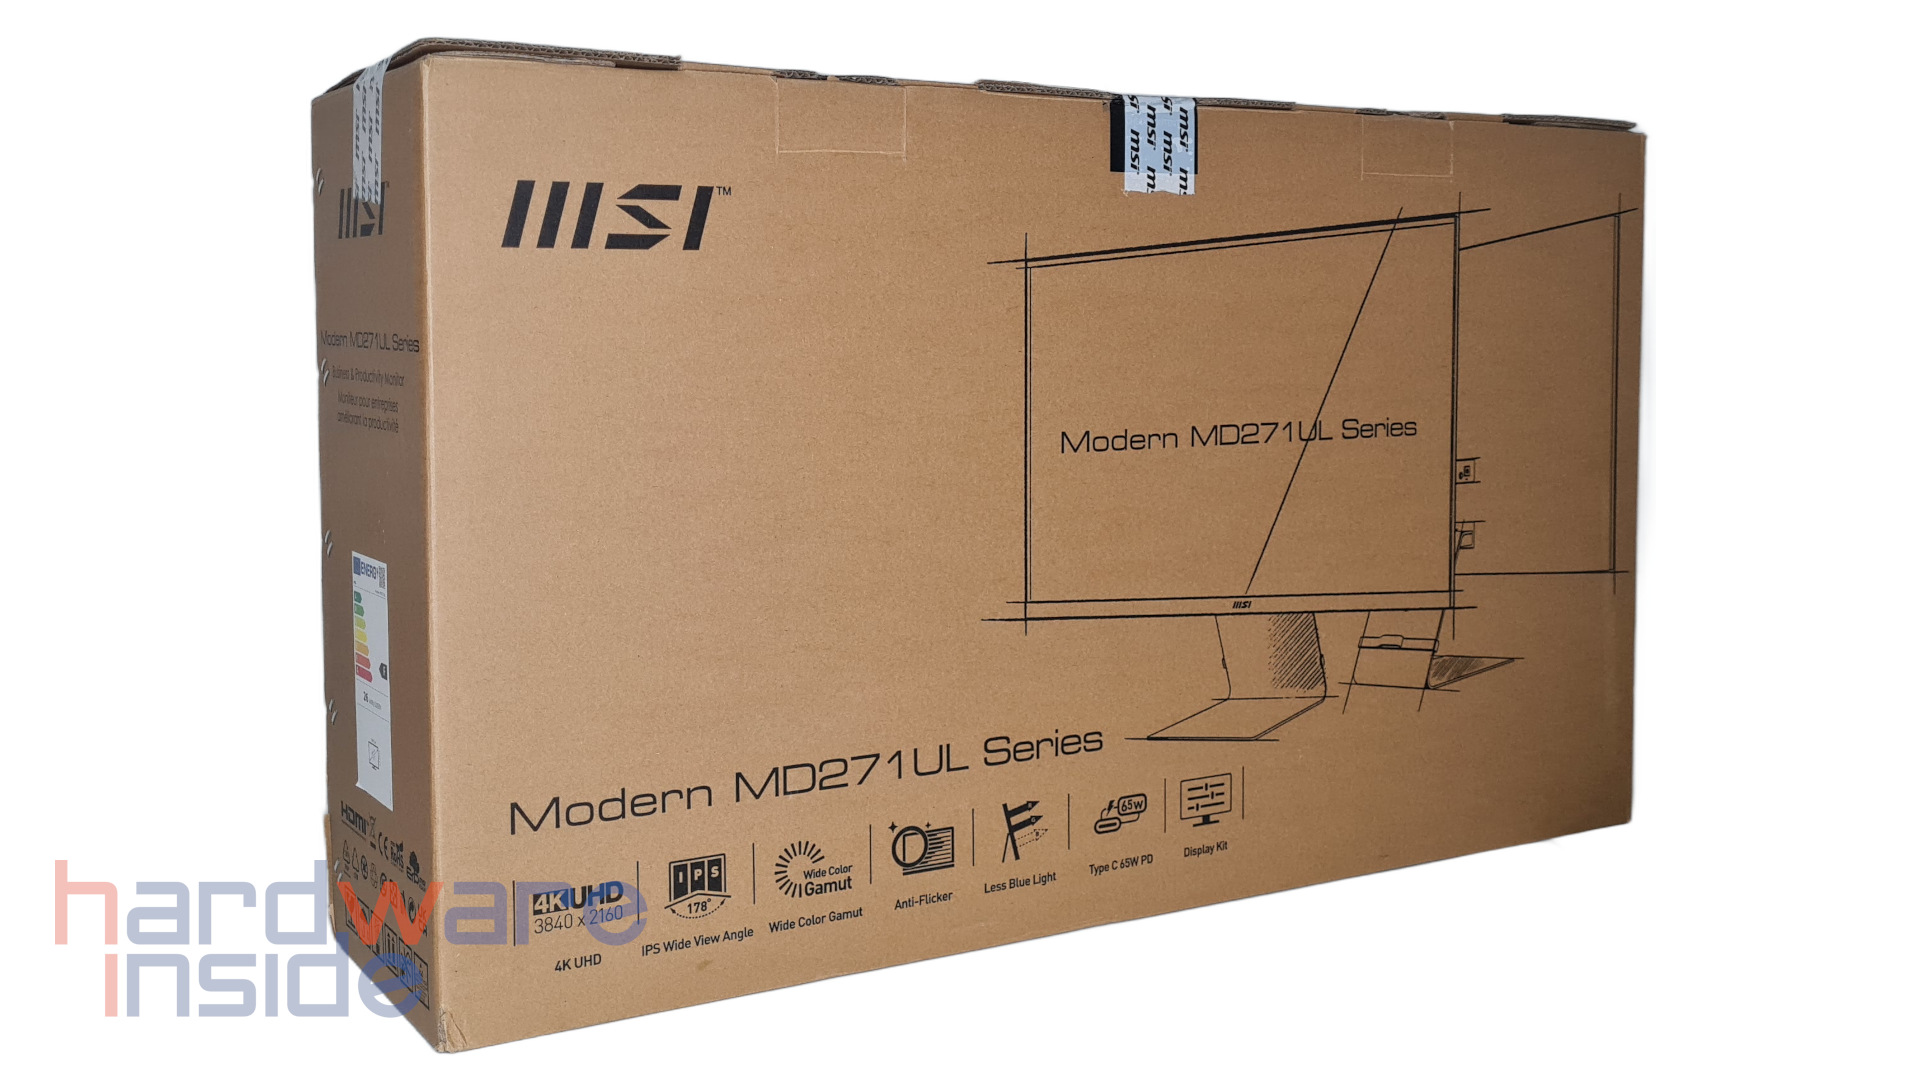 Verpackung des MSI Modern MD271UL